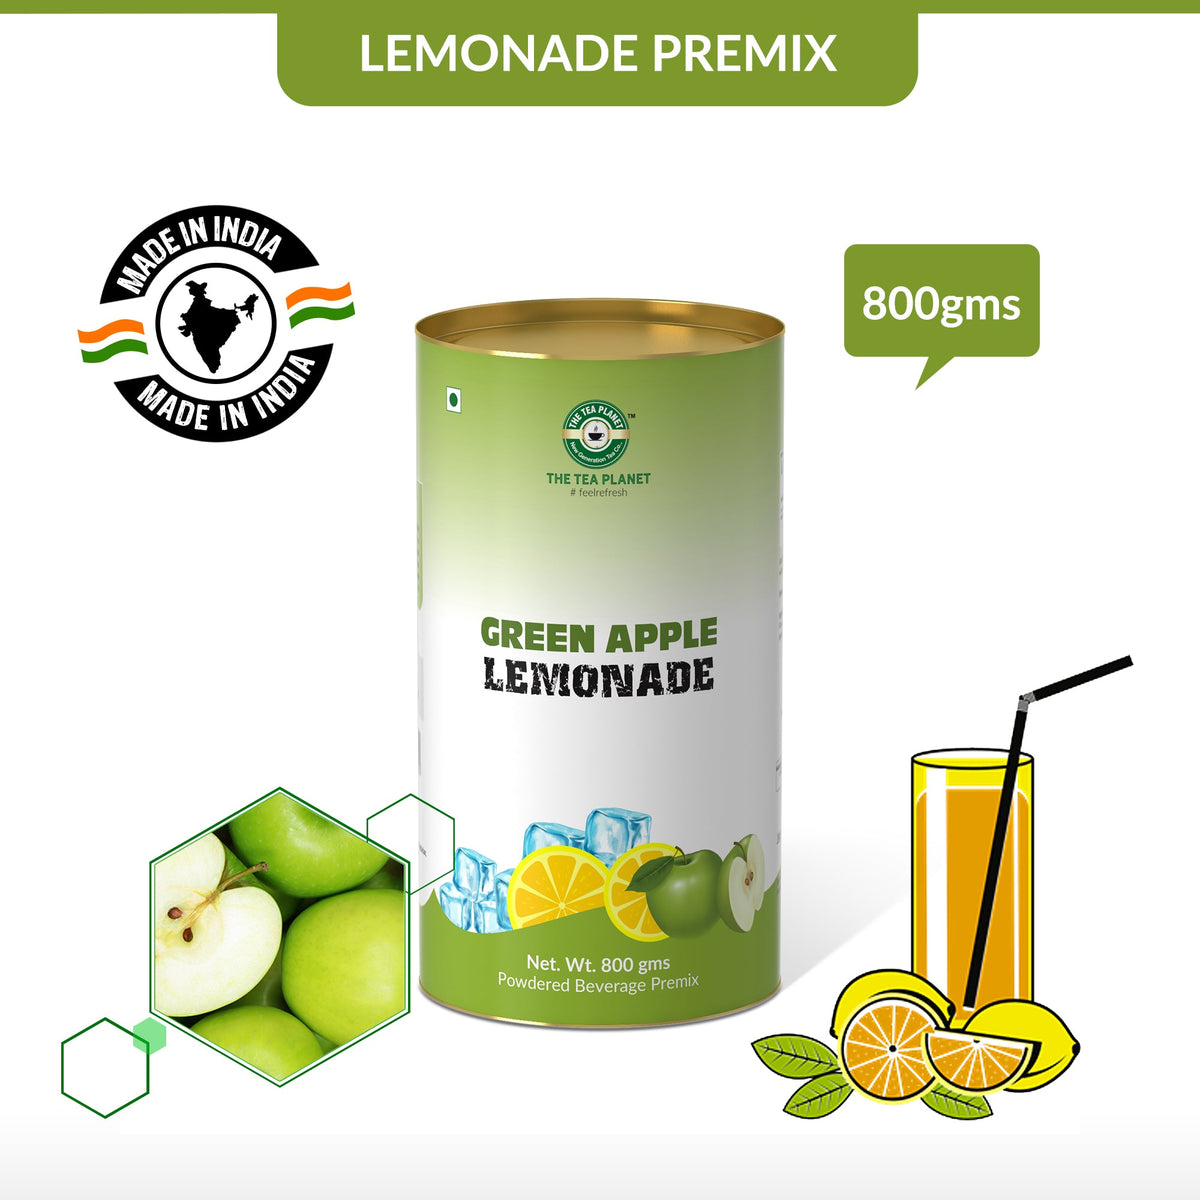 Green Apple Lemonade Premix